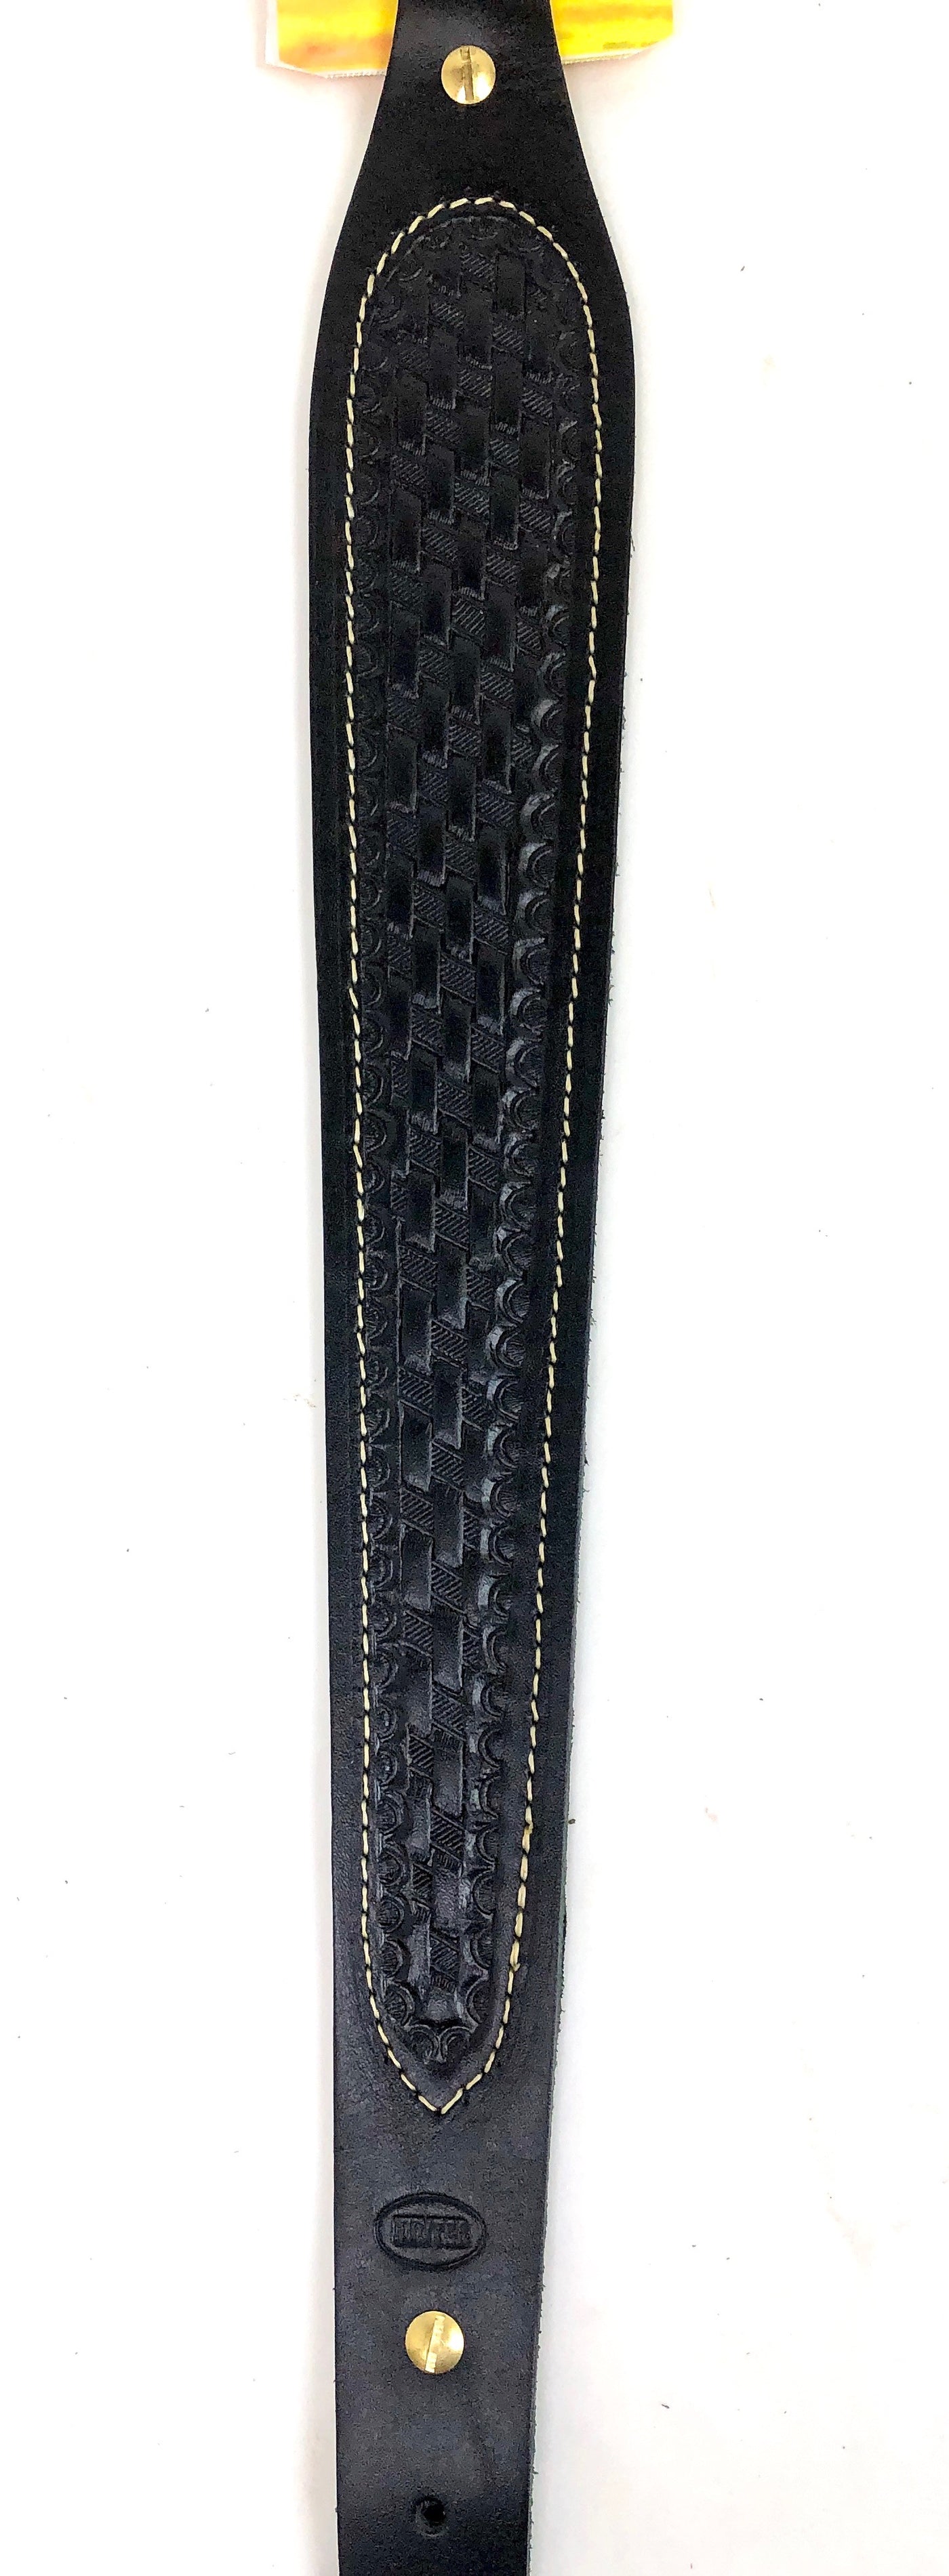 Cobra Rifle Sling - Basket Weave Style